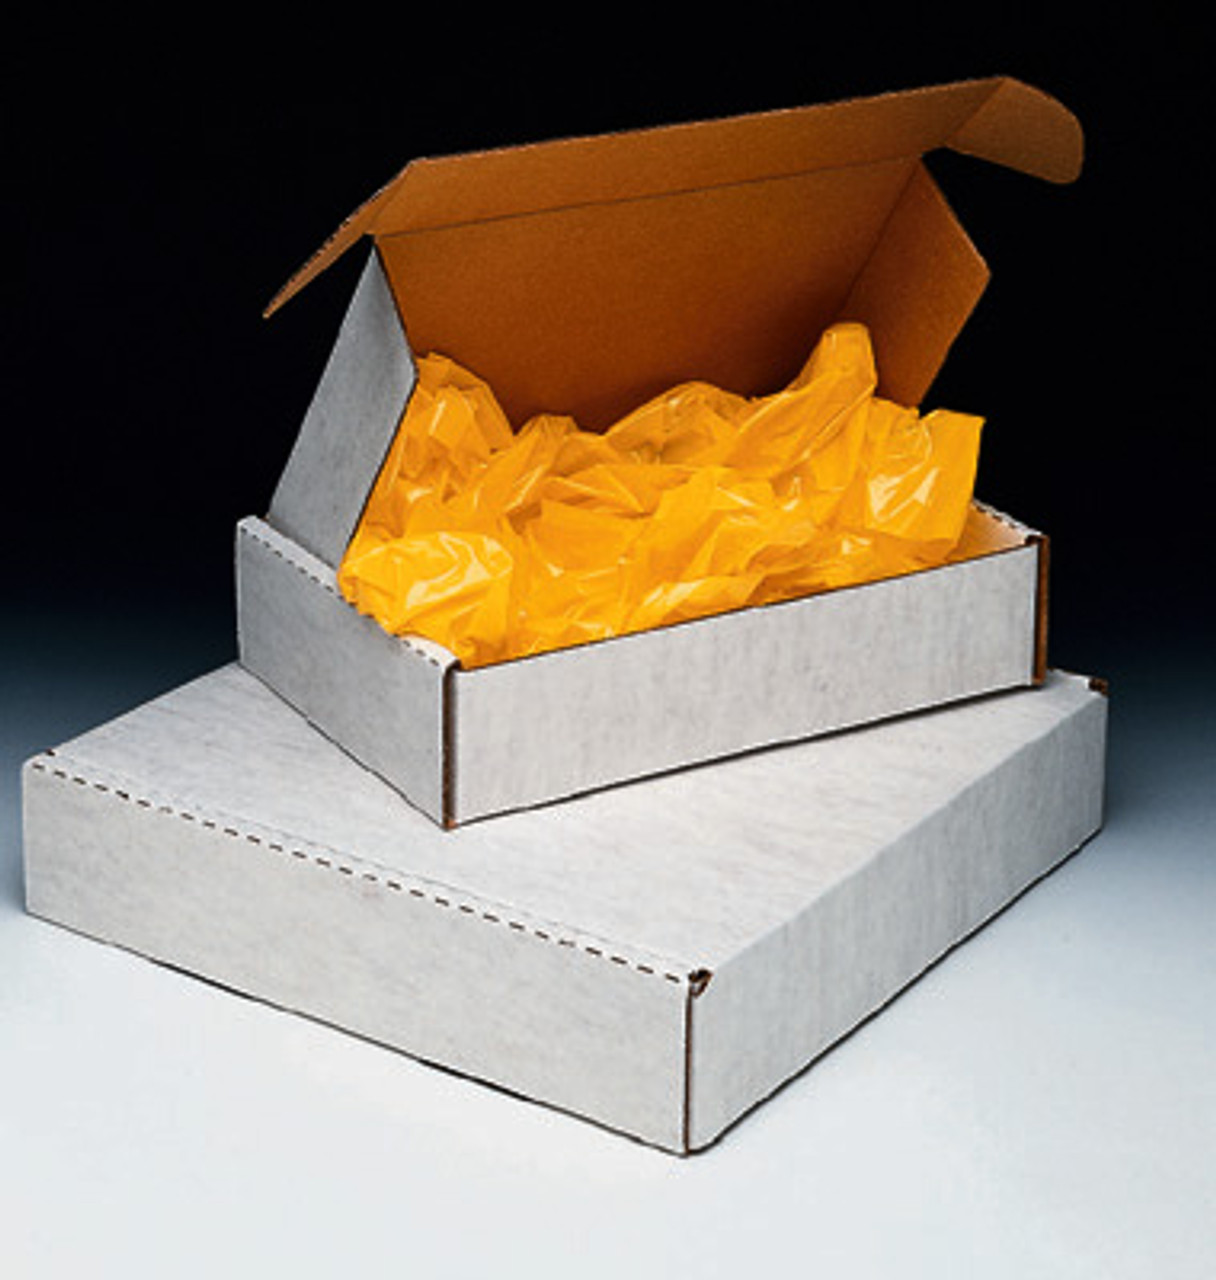 Die-Cut Corrugated Box - White (200-lb. Test / 32-lb. ECT) (Qty) 25 Items  - SOLD IN BUNDLES